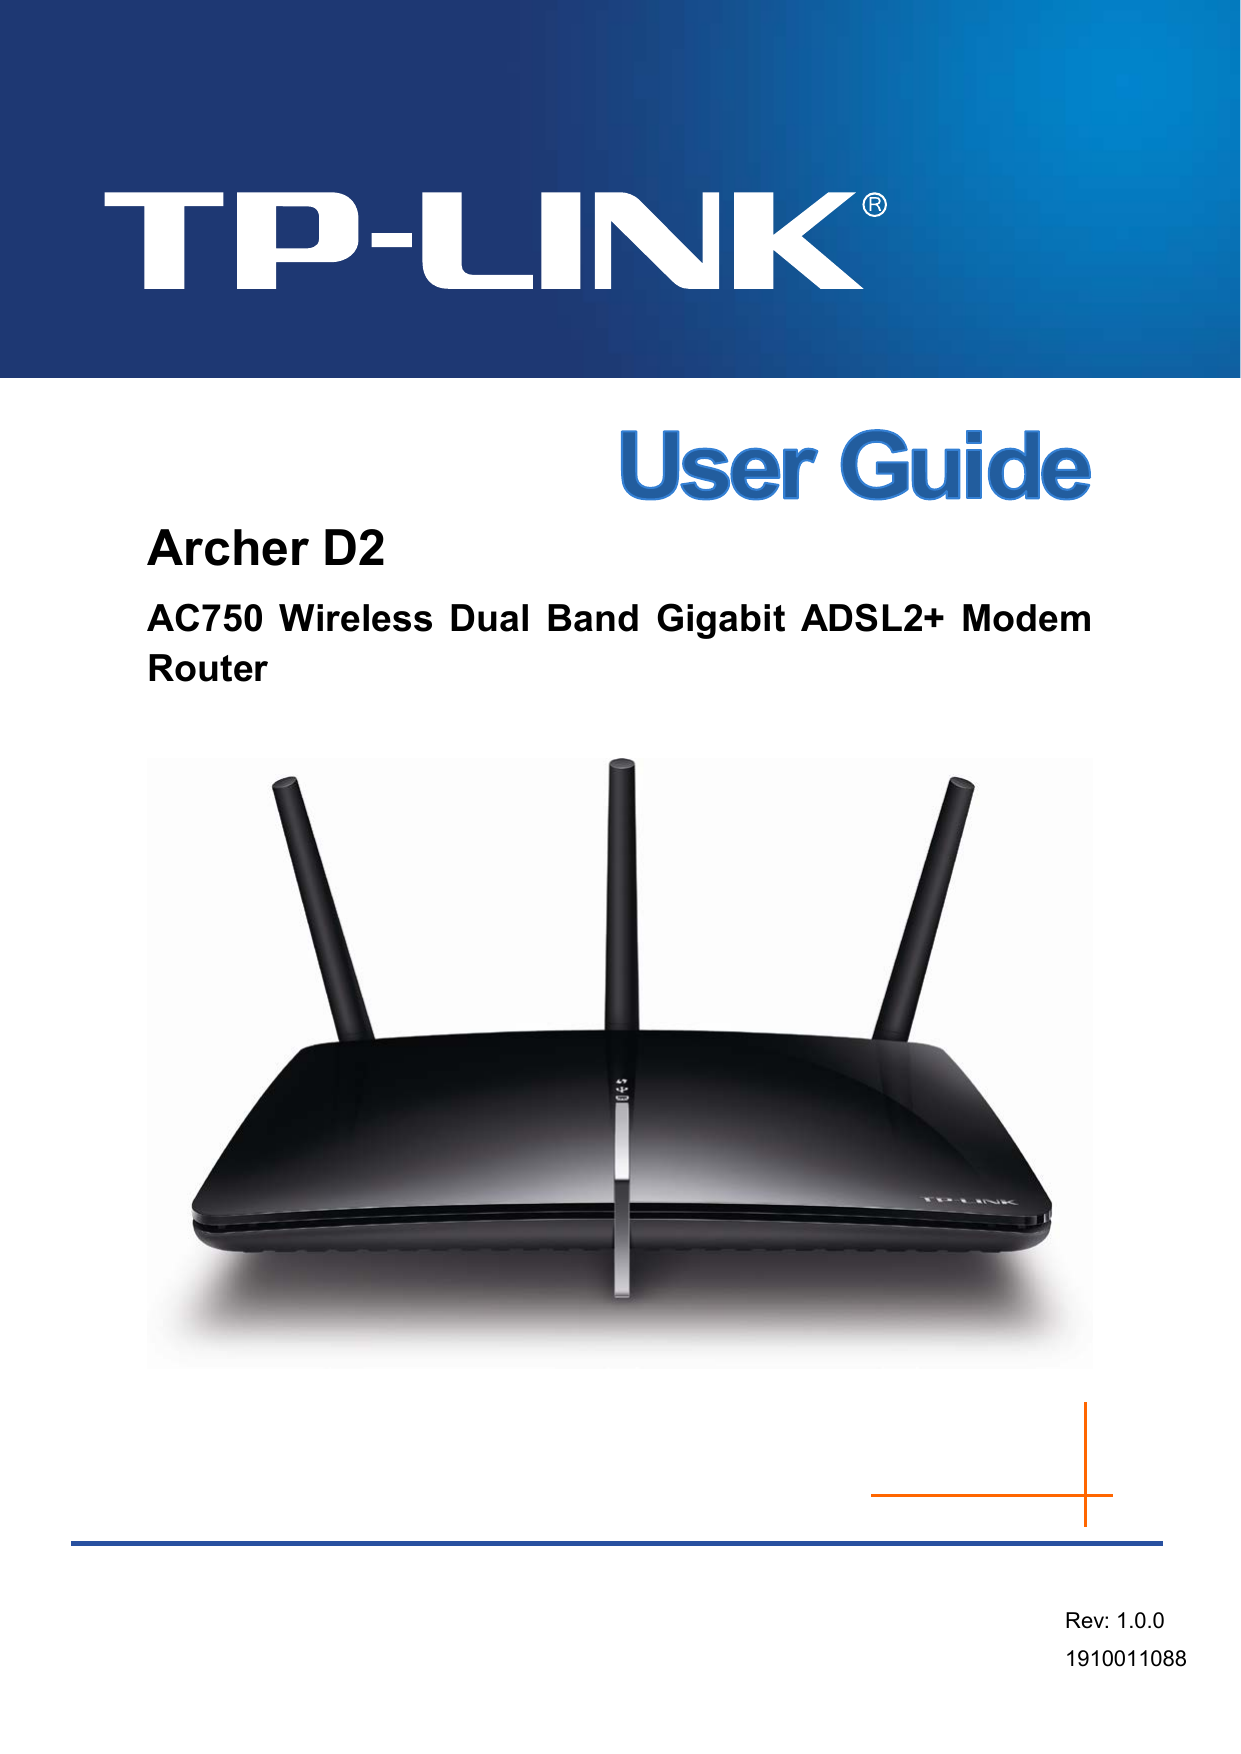   Archer D2 AC750 Wireless Dual Band Gigabit ADSL2+ Modem Router  Rev: 1.0.0 1910011088  